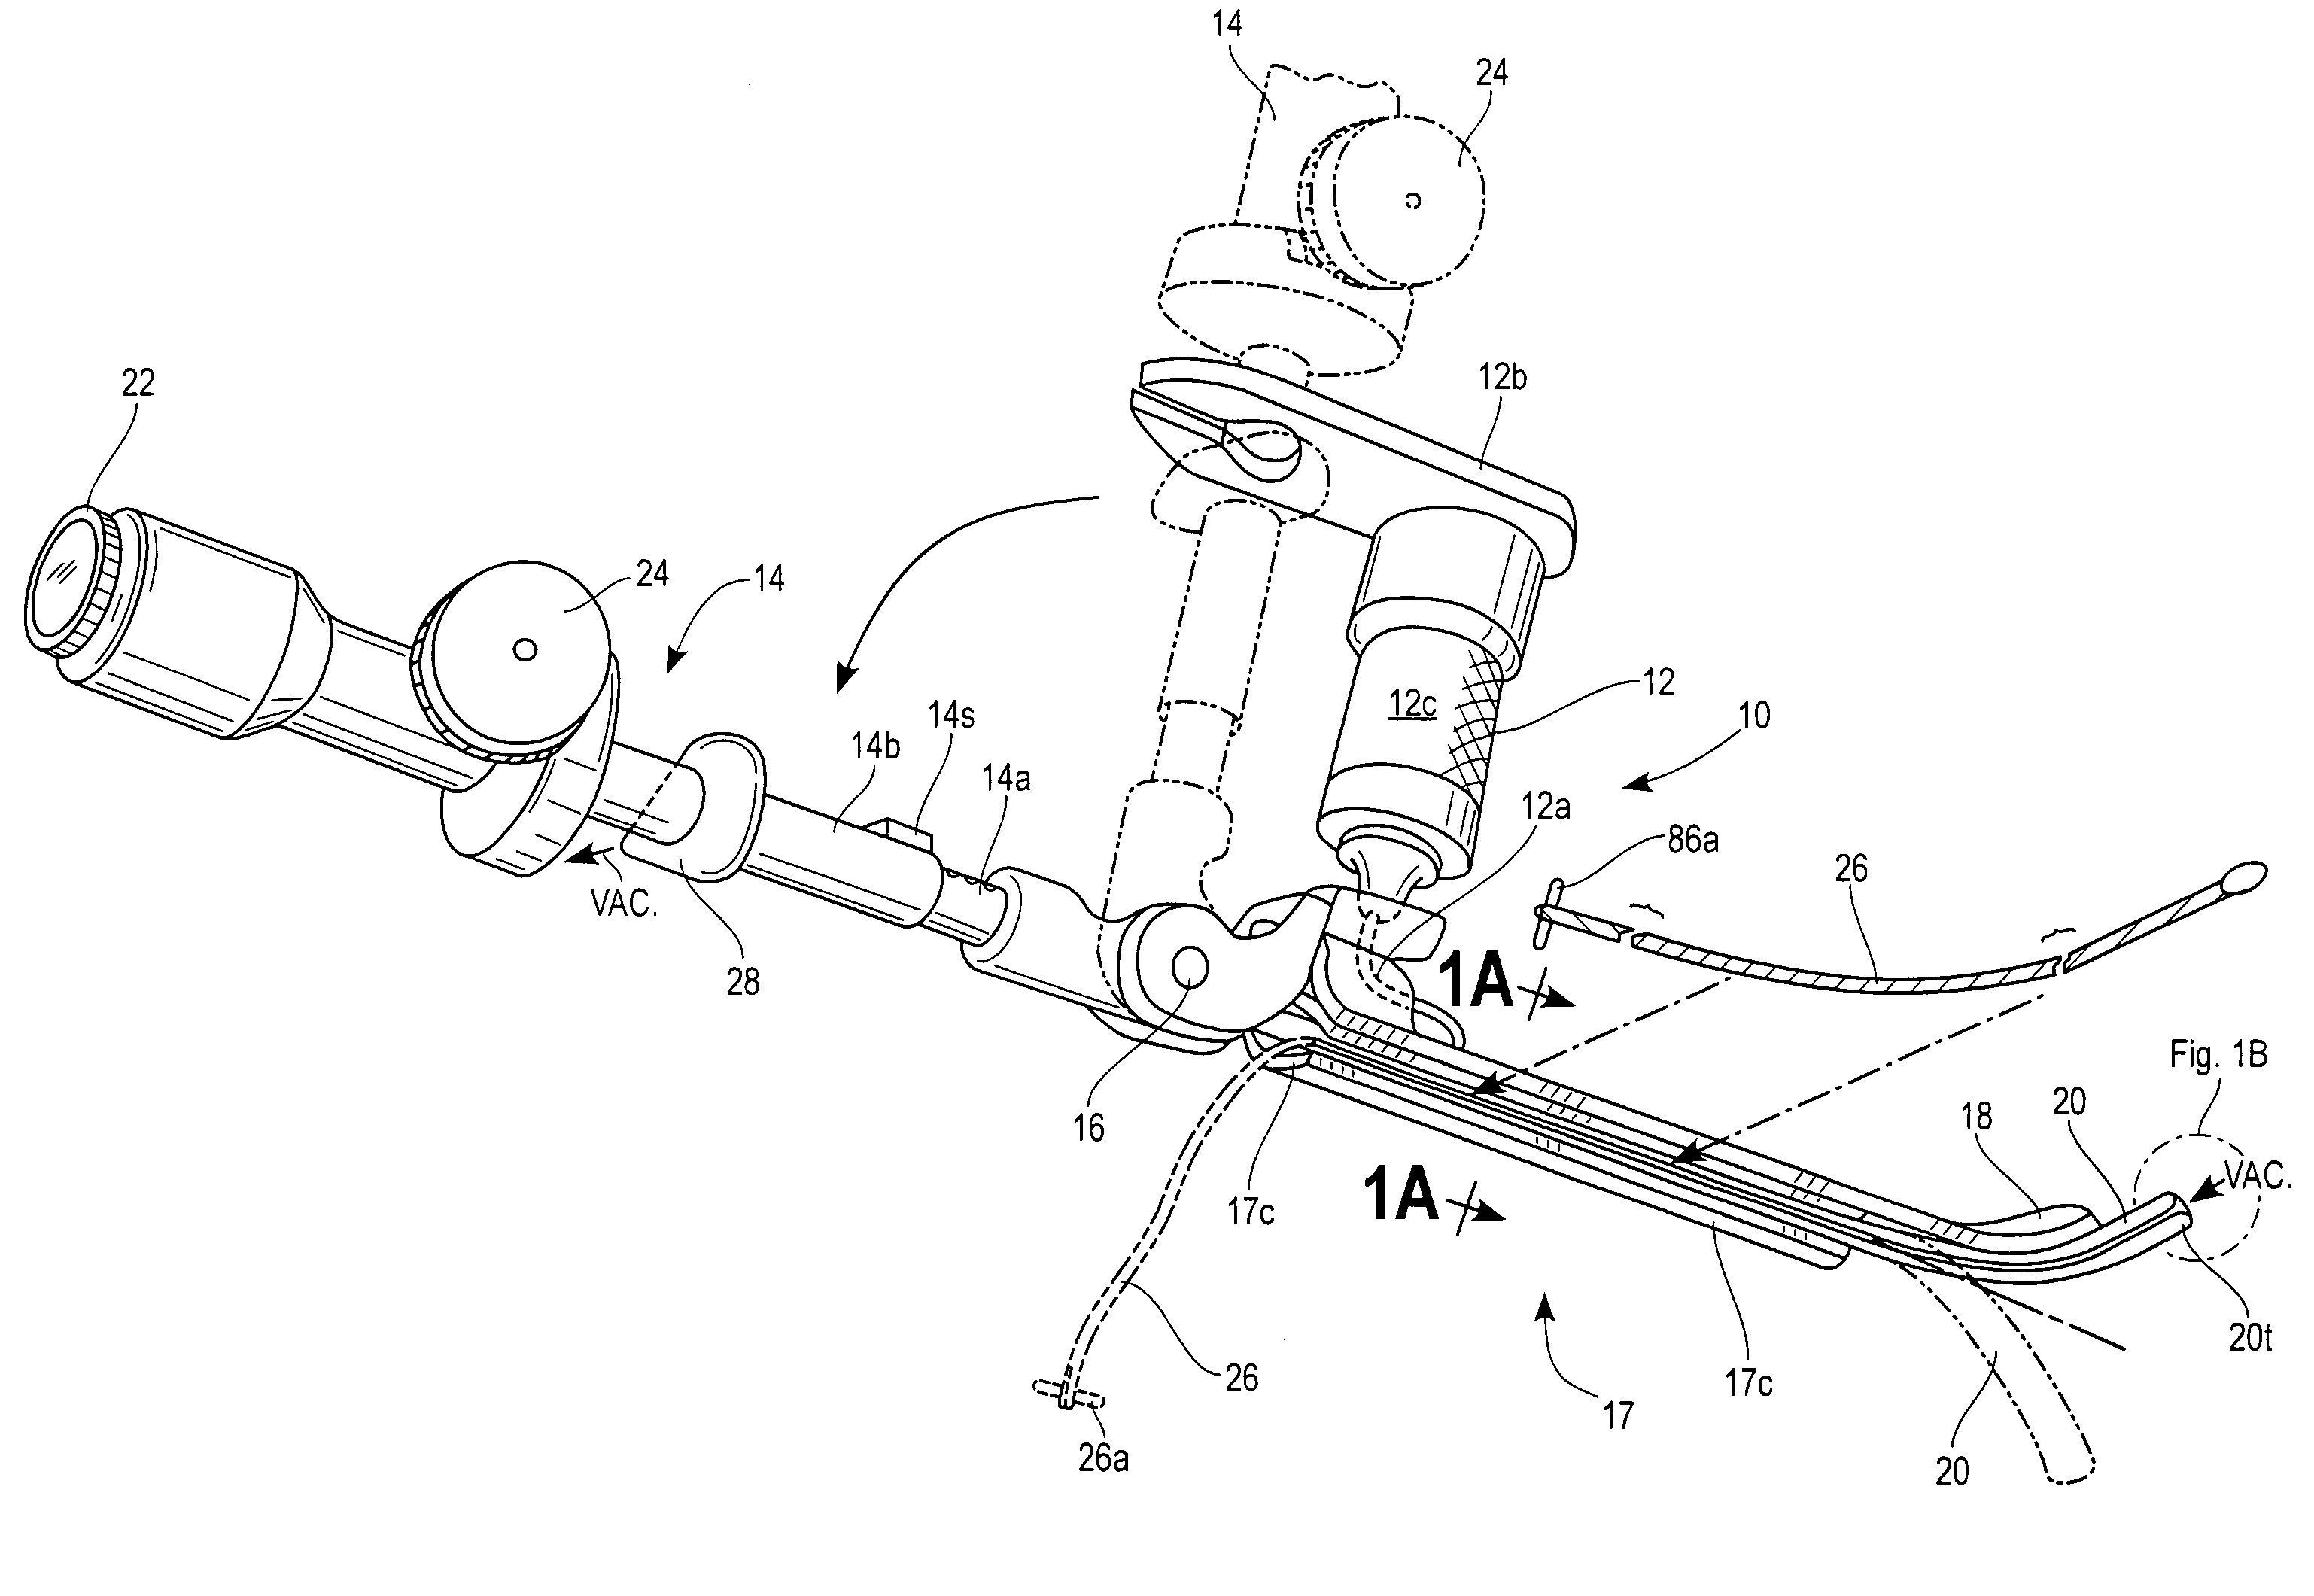 Instrument for direct laryngoscopy with a rigid blade and flexible fiberoptics